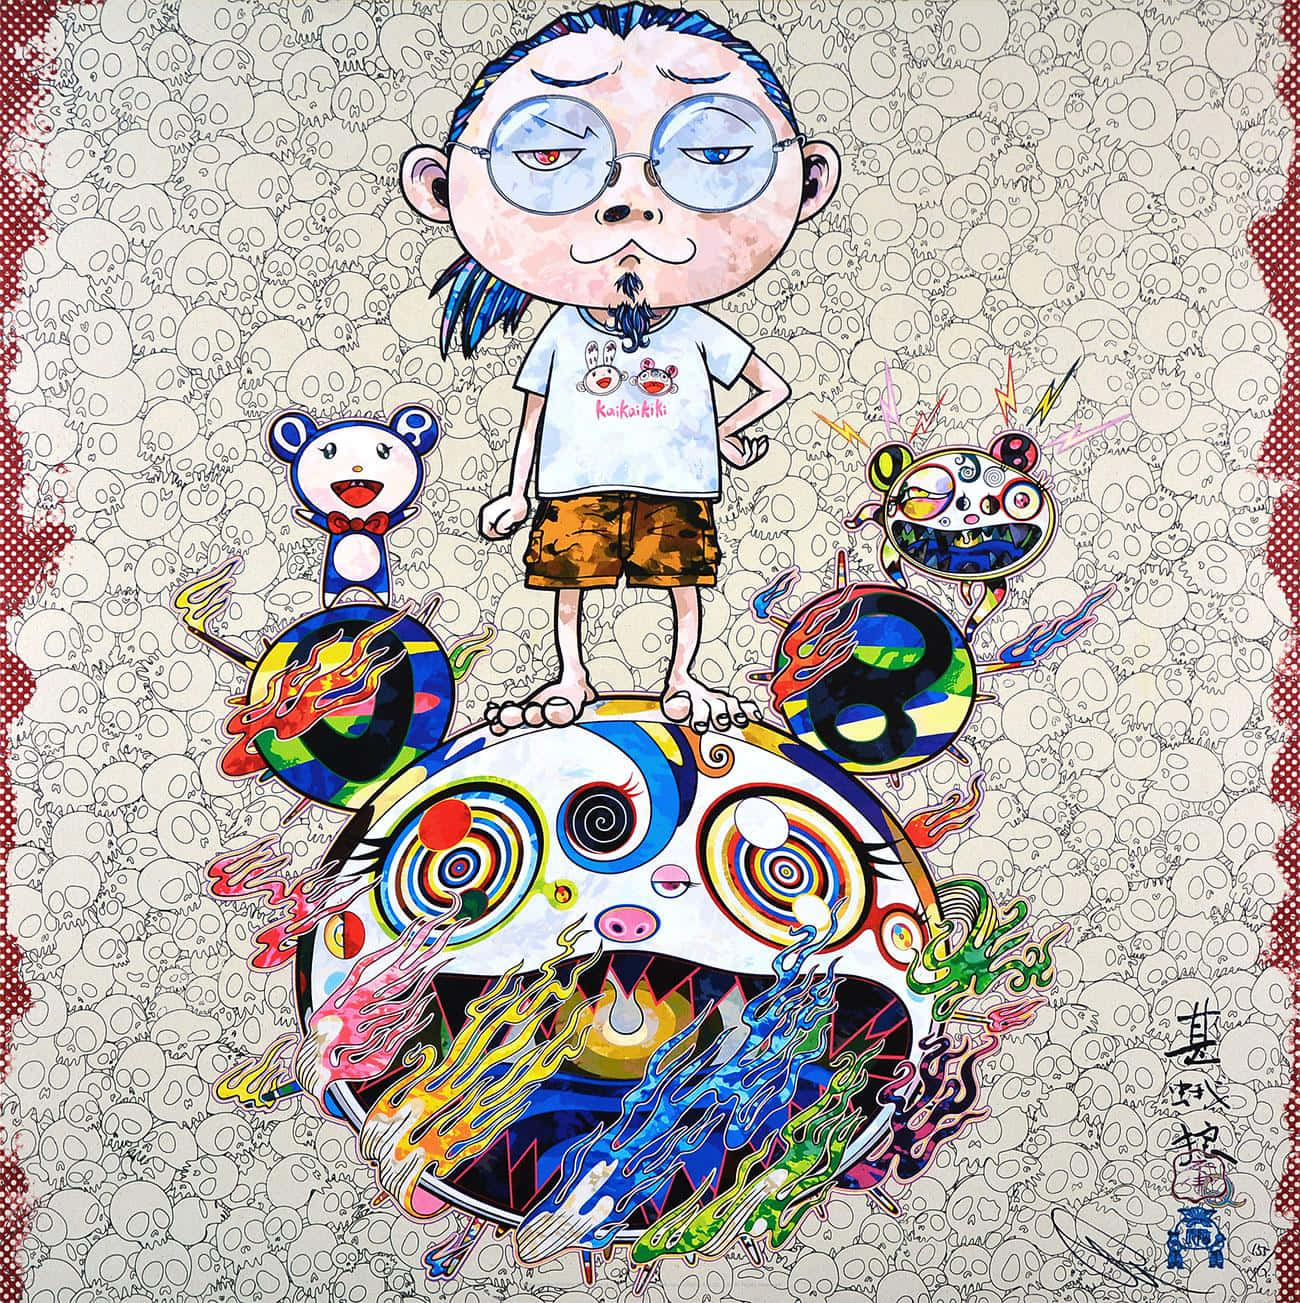 Download Vibrant Japanese Pop Art Explosion Wallpaper | Wallpapers.com